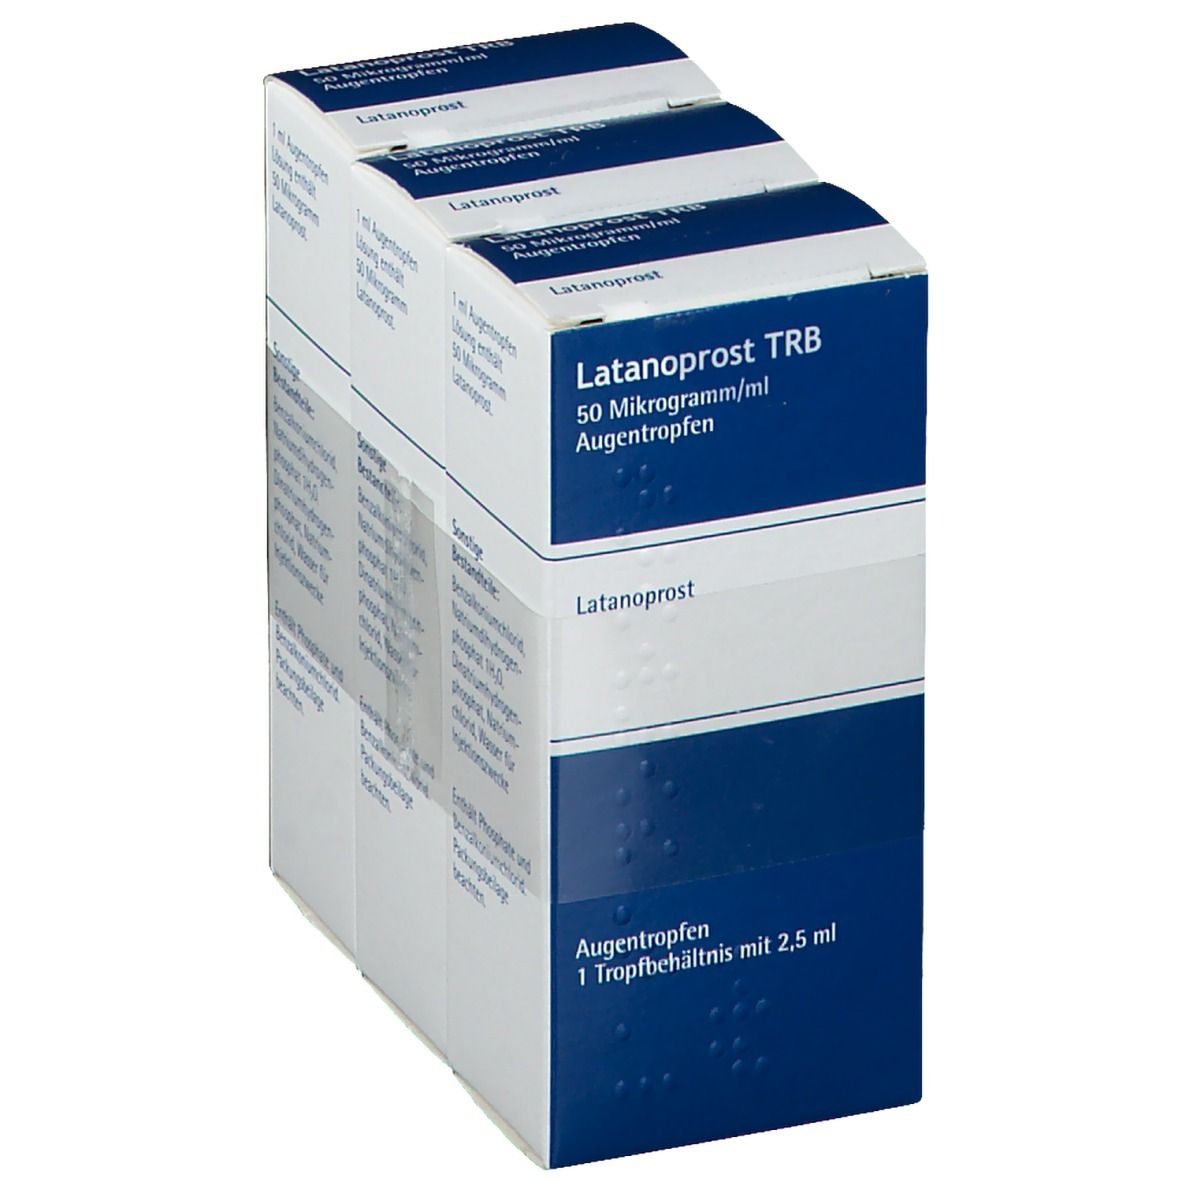 Latanoprost TRB 50 µg/ml